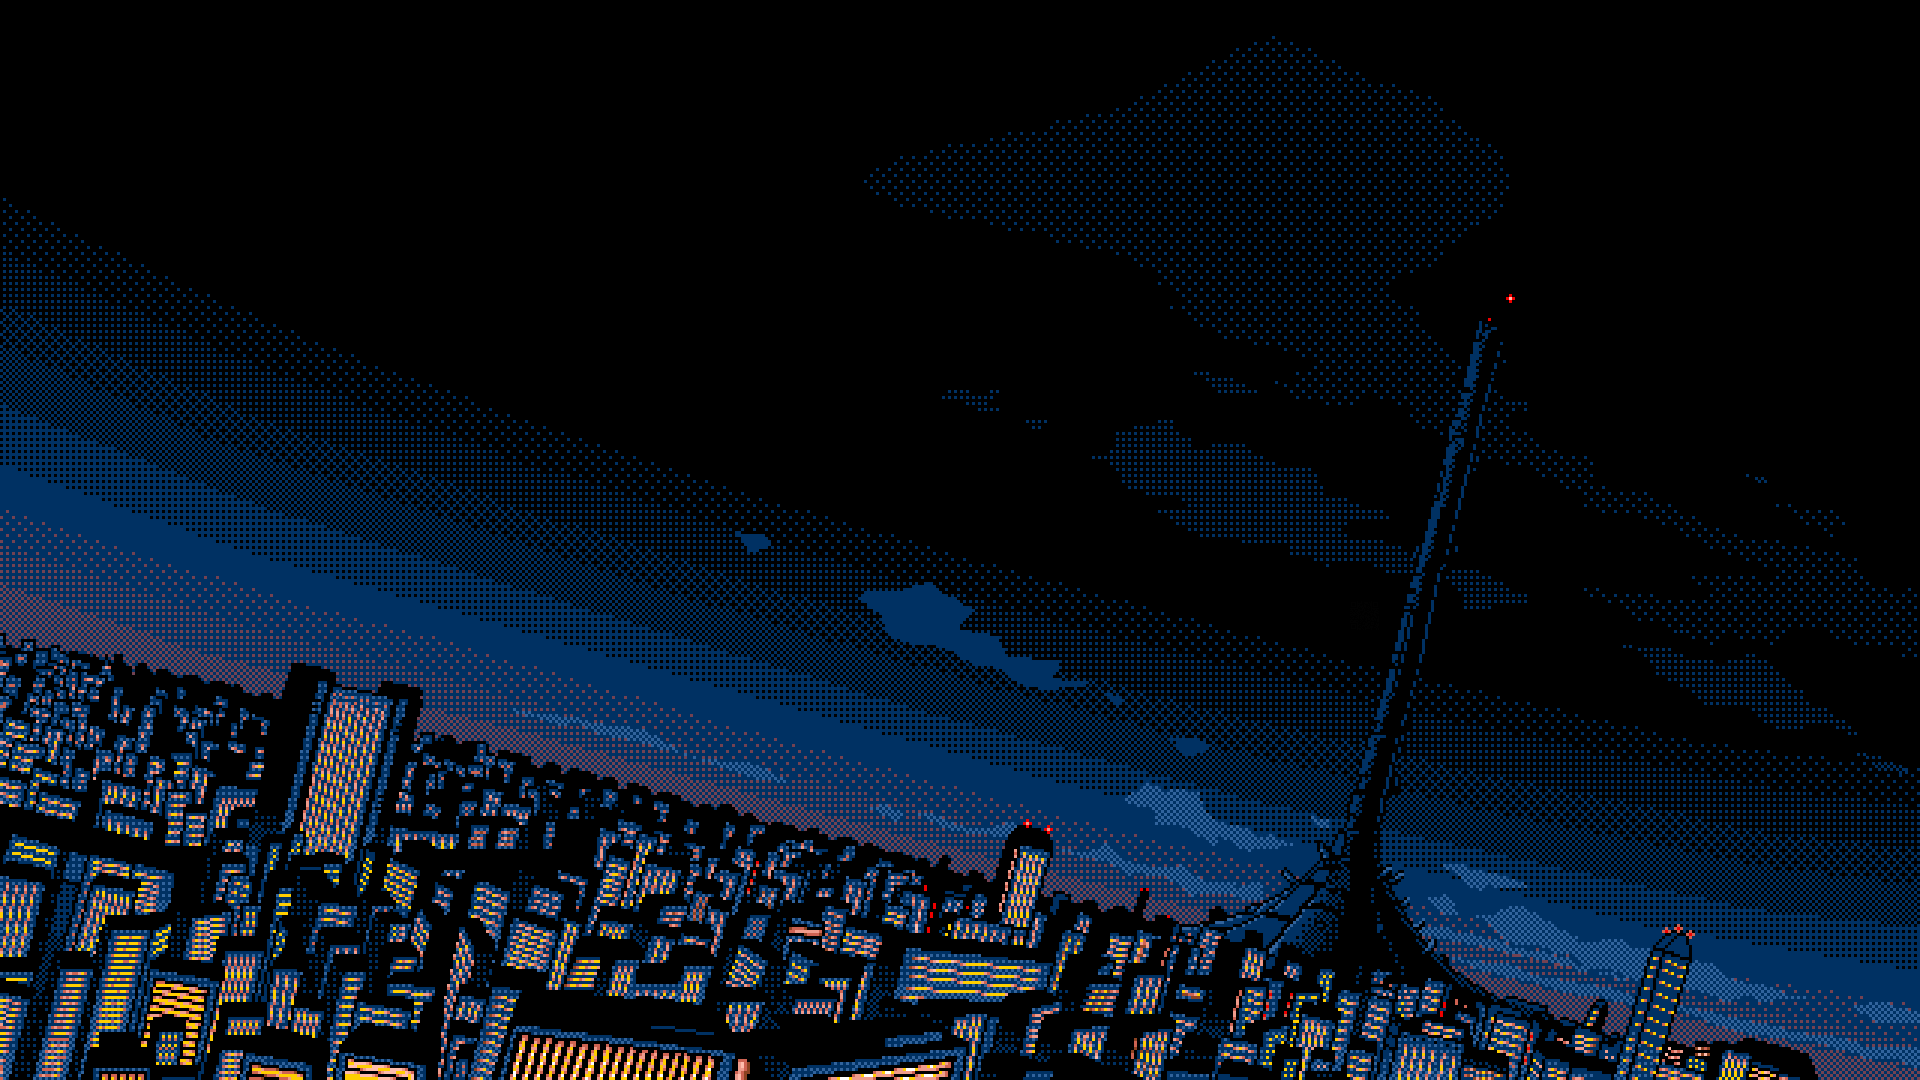 General 1920x1080 PC-98 pixel art dark background cityscape digital art Possessioner city artwork